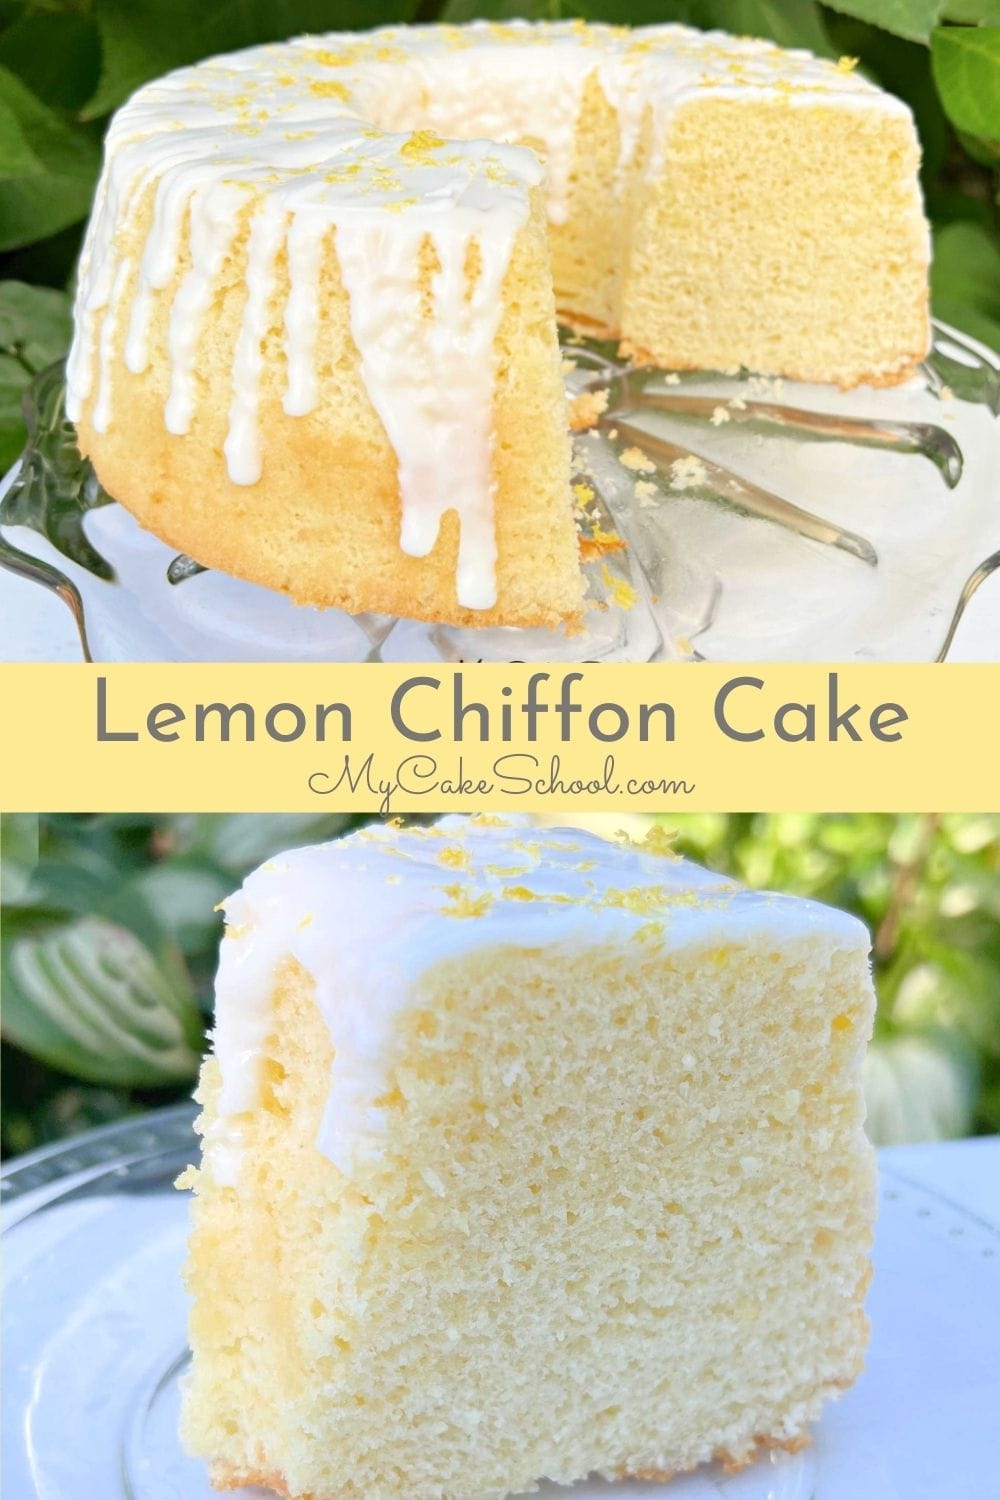 Lemon Chiffon Cake- SO light, airy, and delicious!